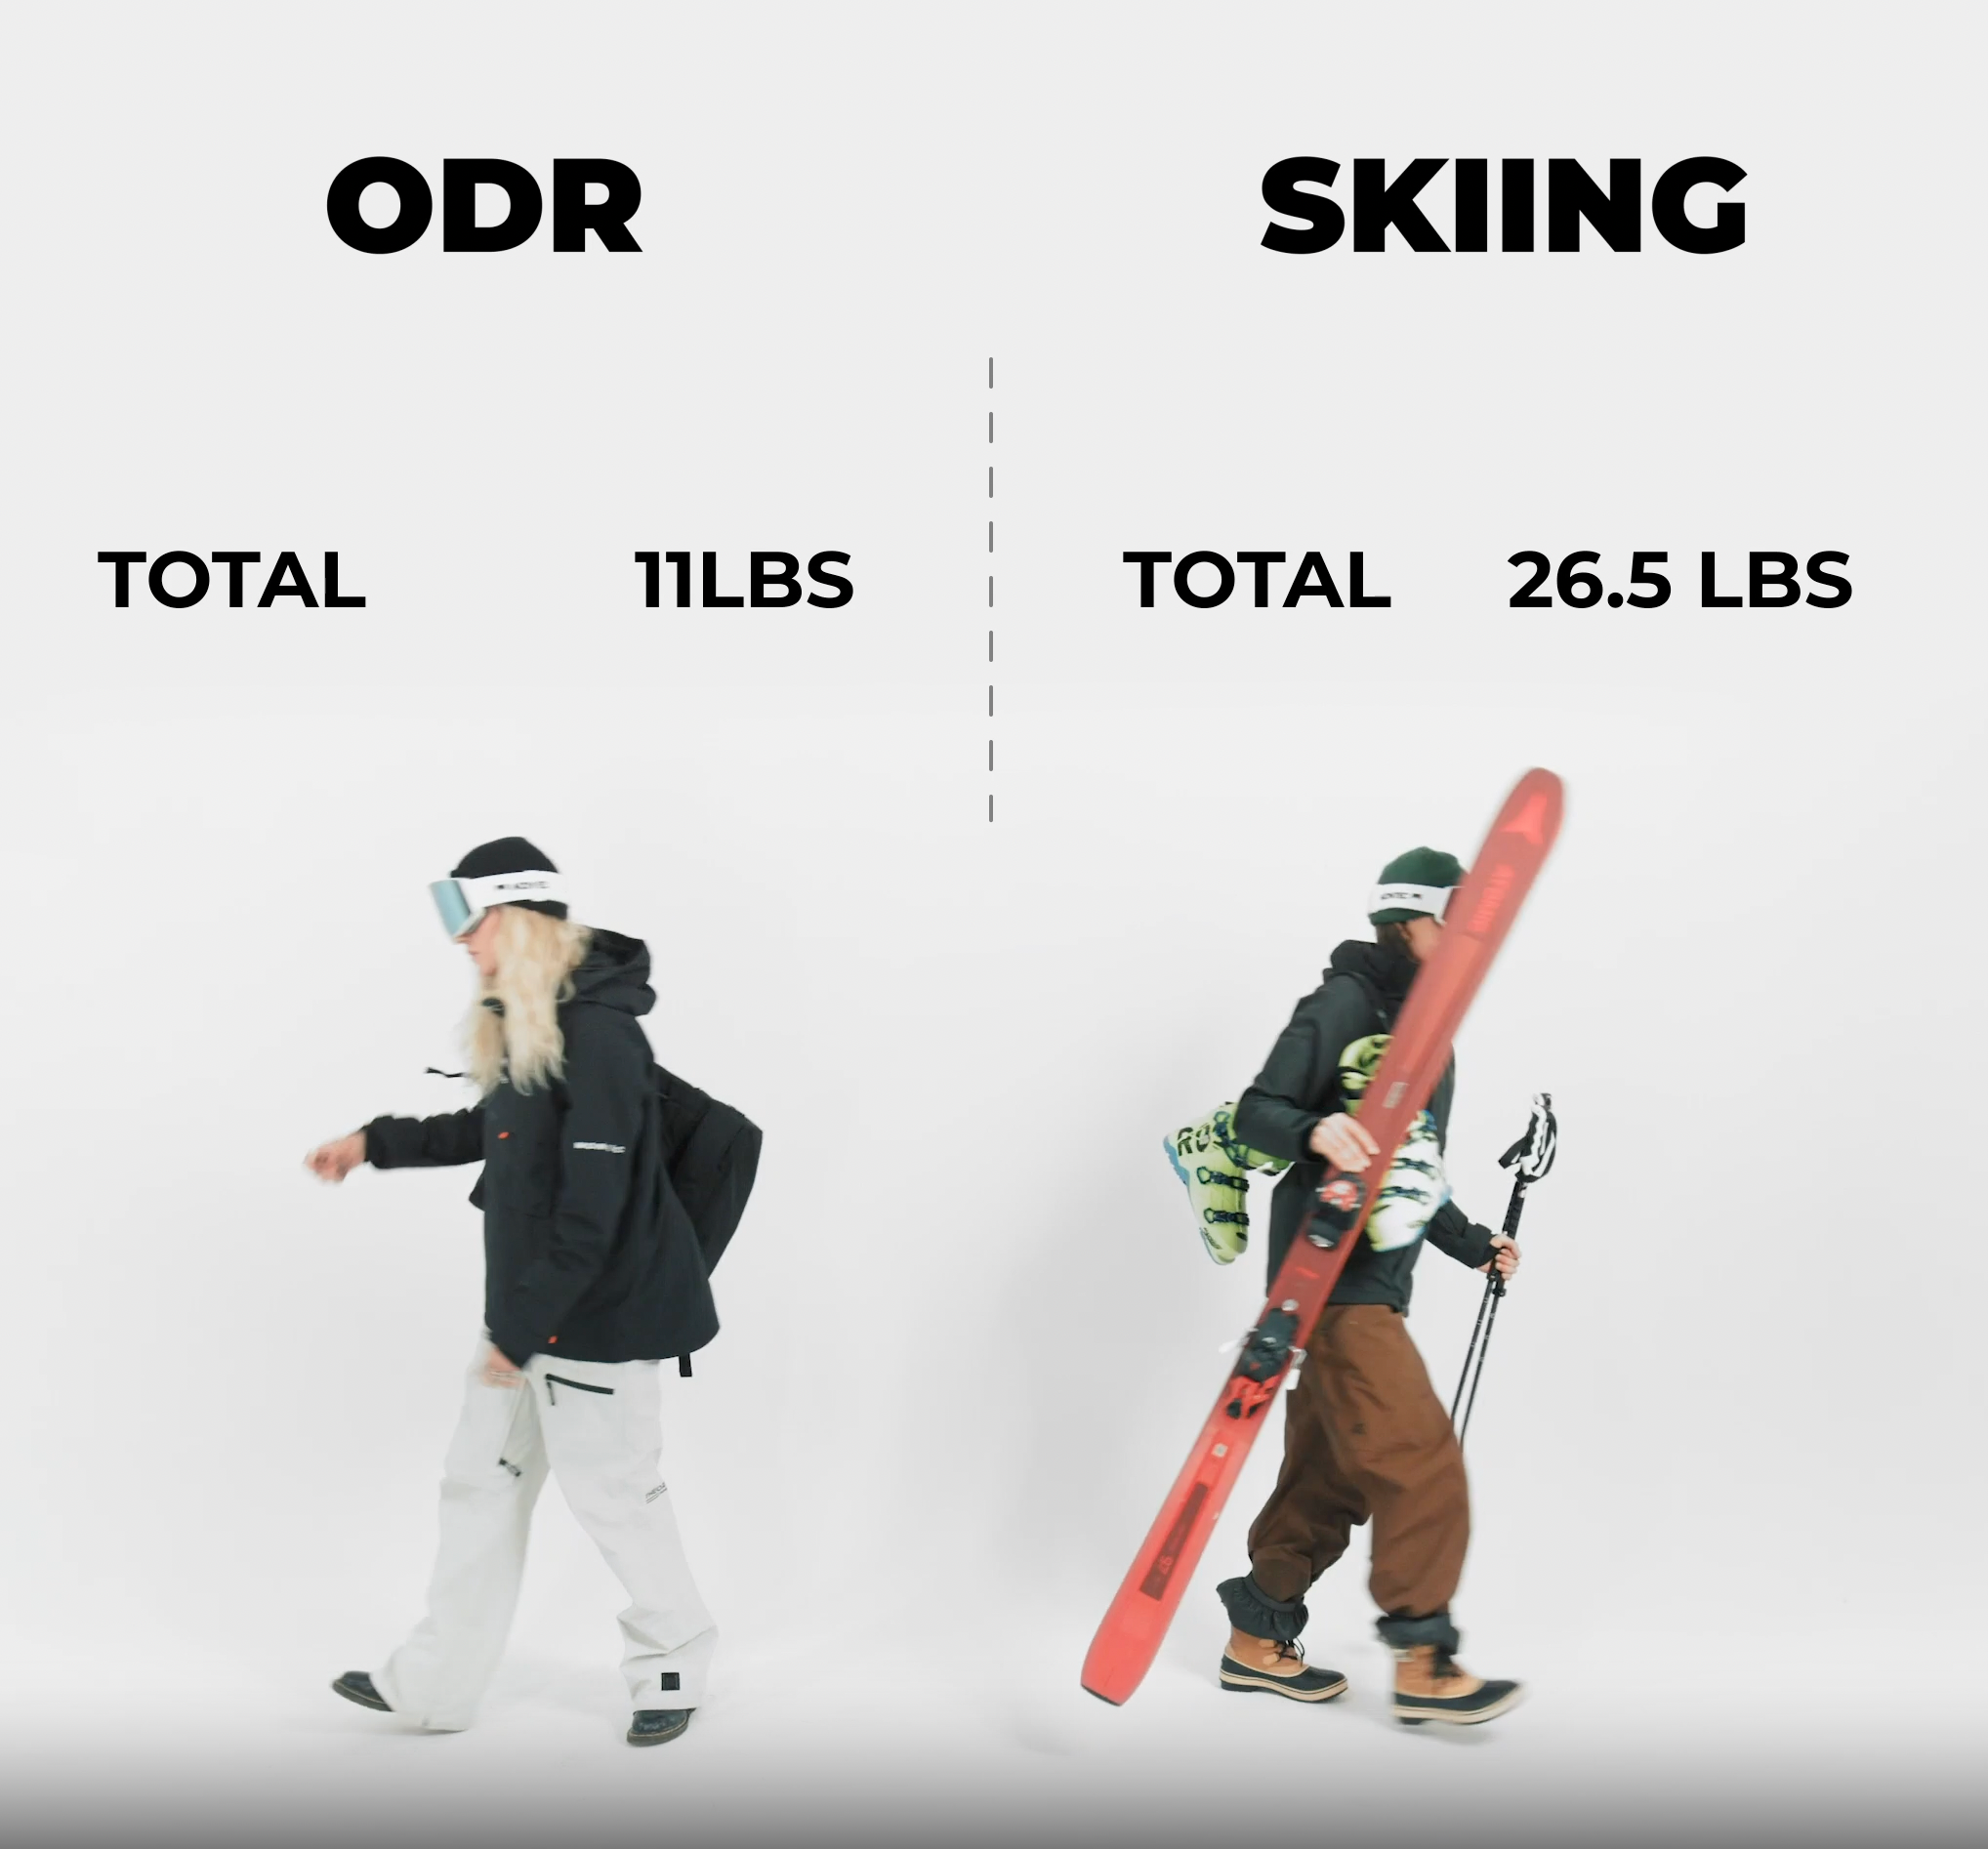 ODR vs. Traditional Equipment